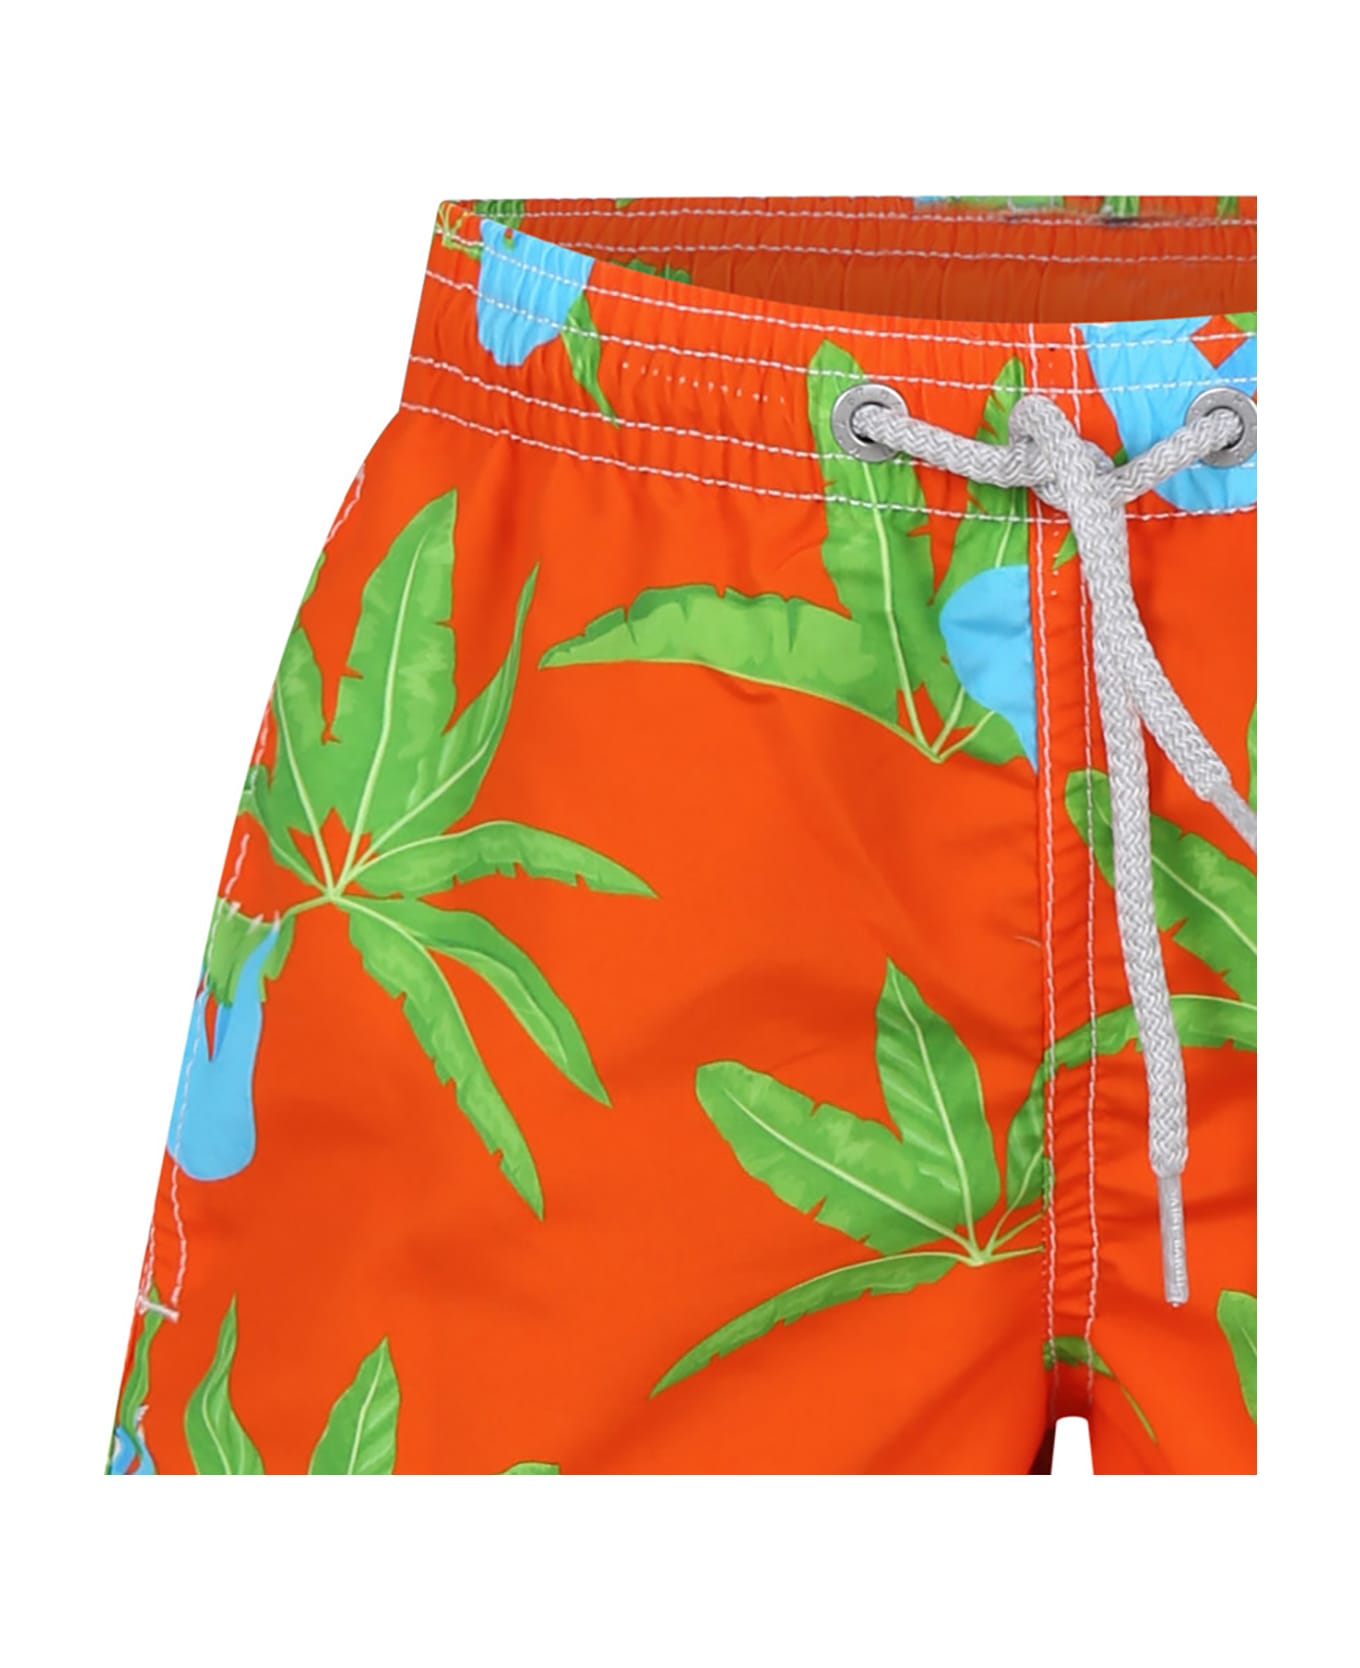 MC2 Saint Barth Orange Swim Shorts For Boy With Sloth Print - Orange